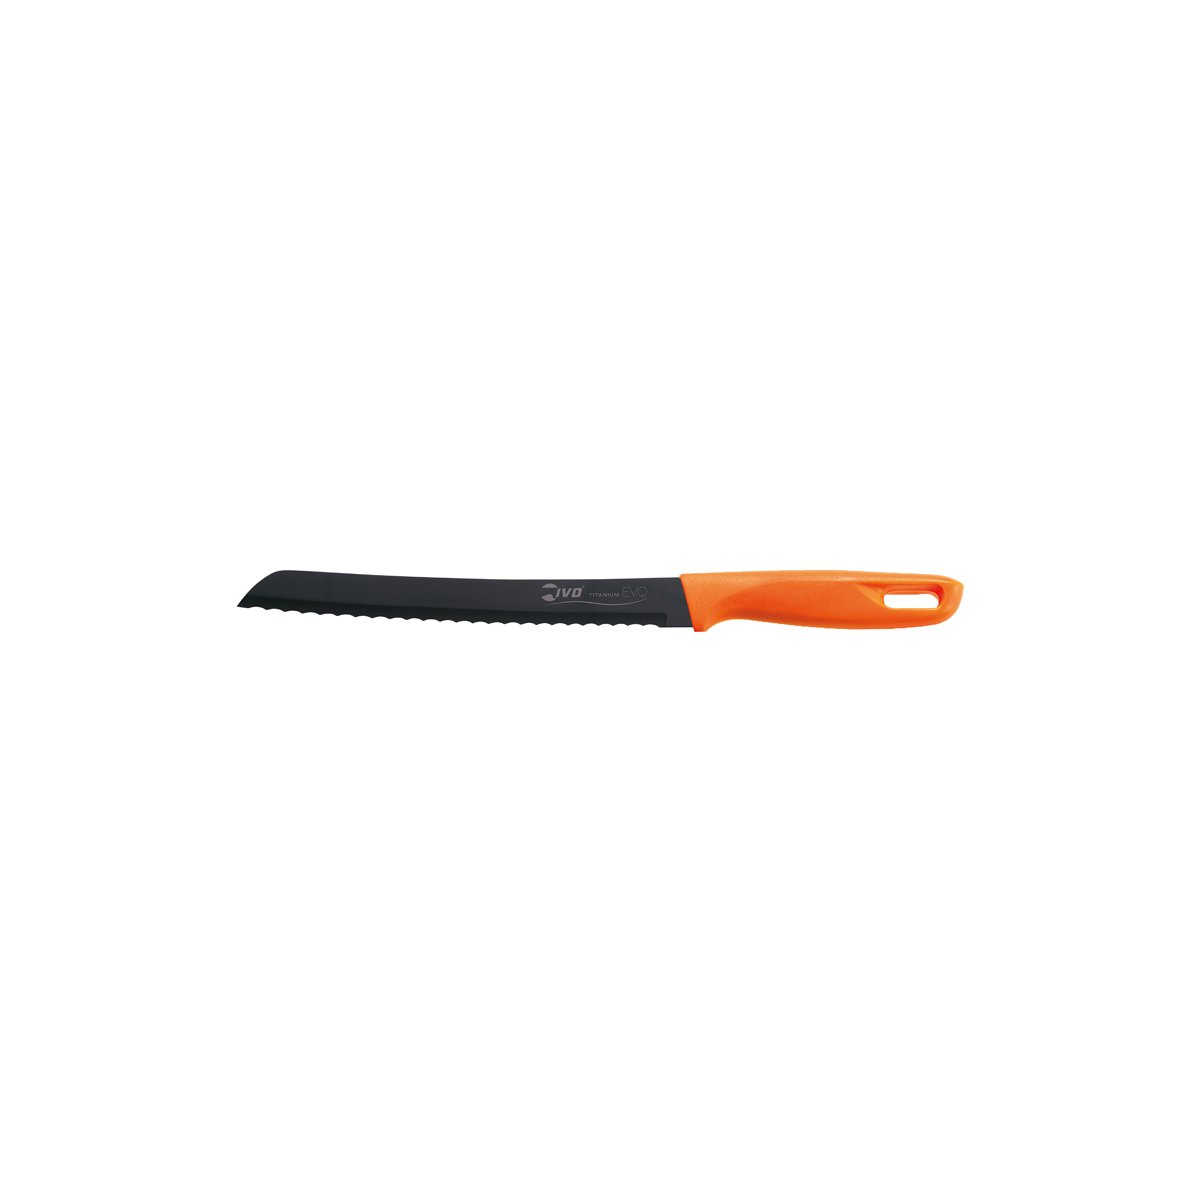 27098 Ivo Titanium Evo 221000 Bread Knife Serrated Orange Handle 205mm Tomkin Australia Hospitality Supplies